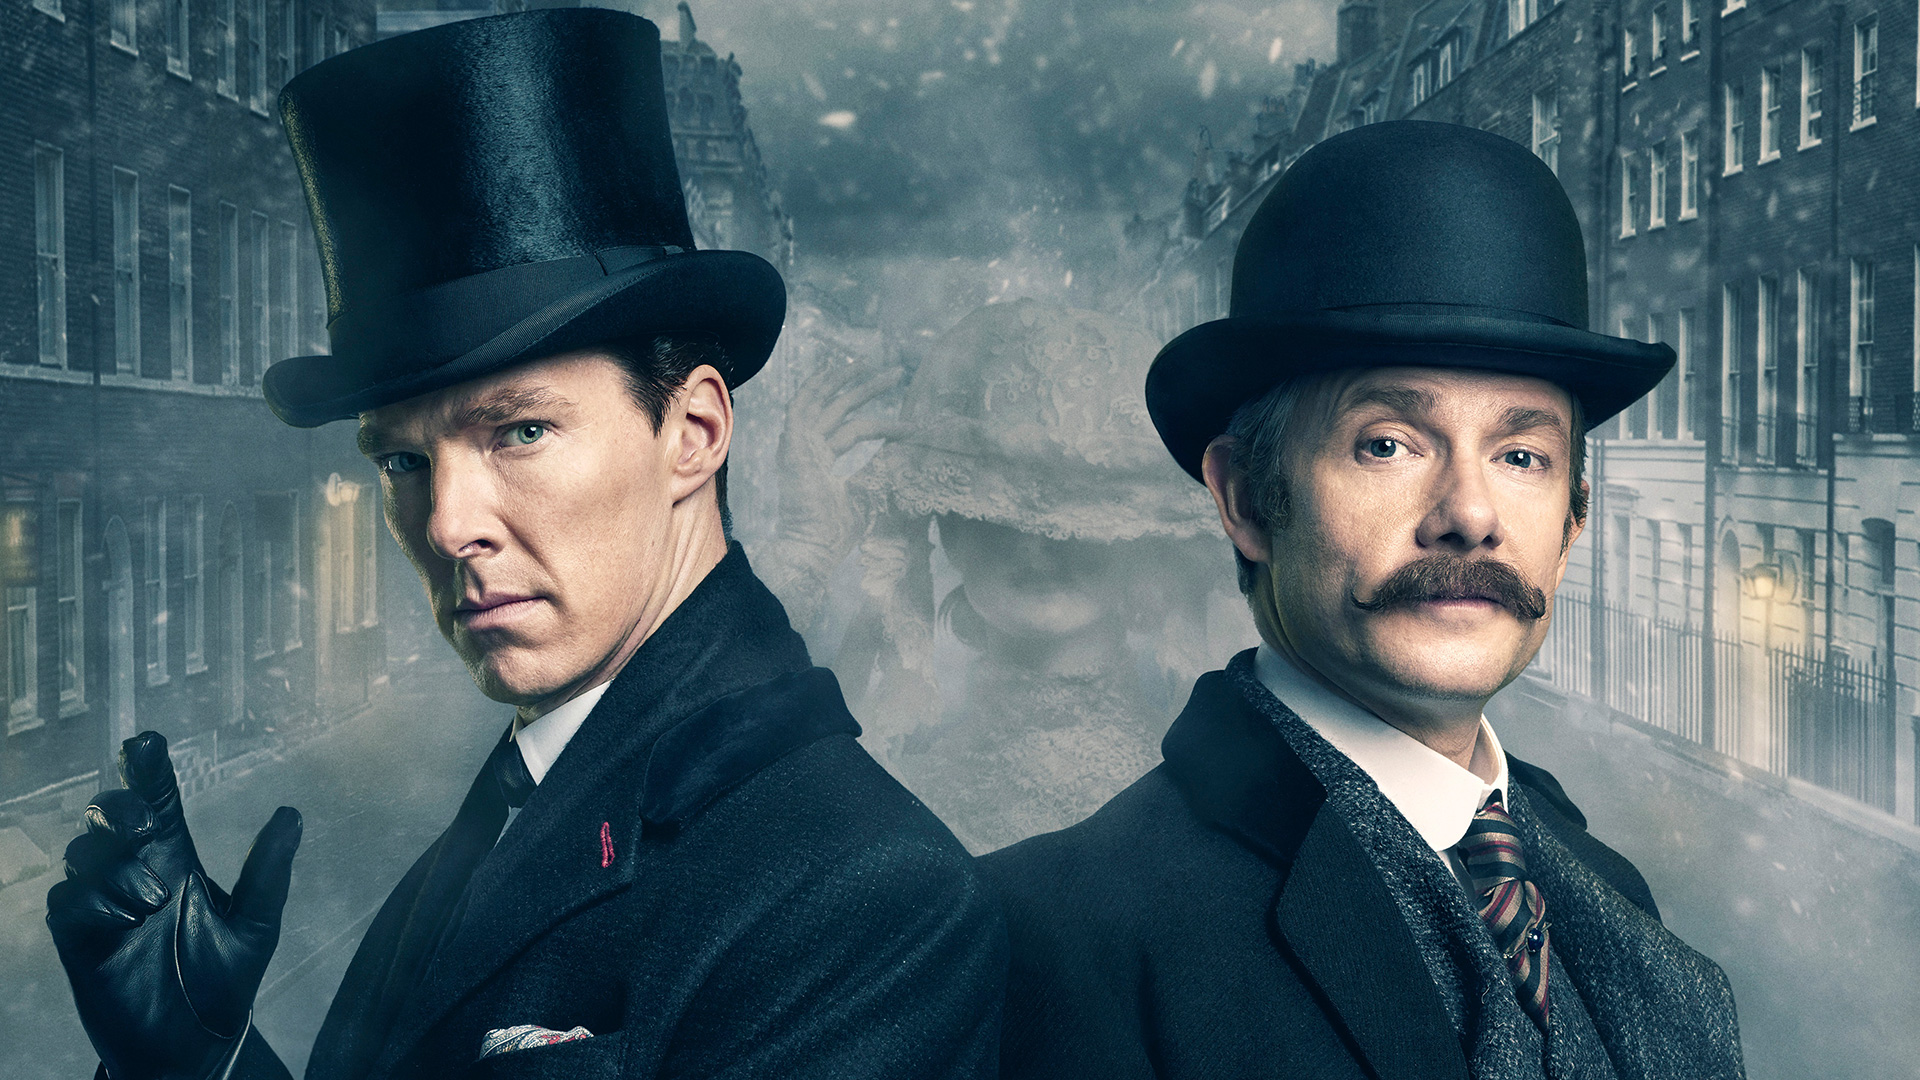 Benedict Cumberbatch Films Rainy Night Scene for ‘Sherlock’ (video)